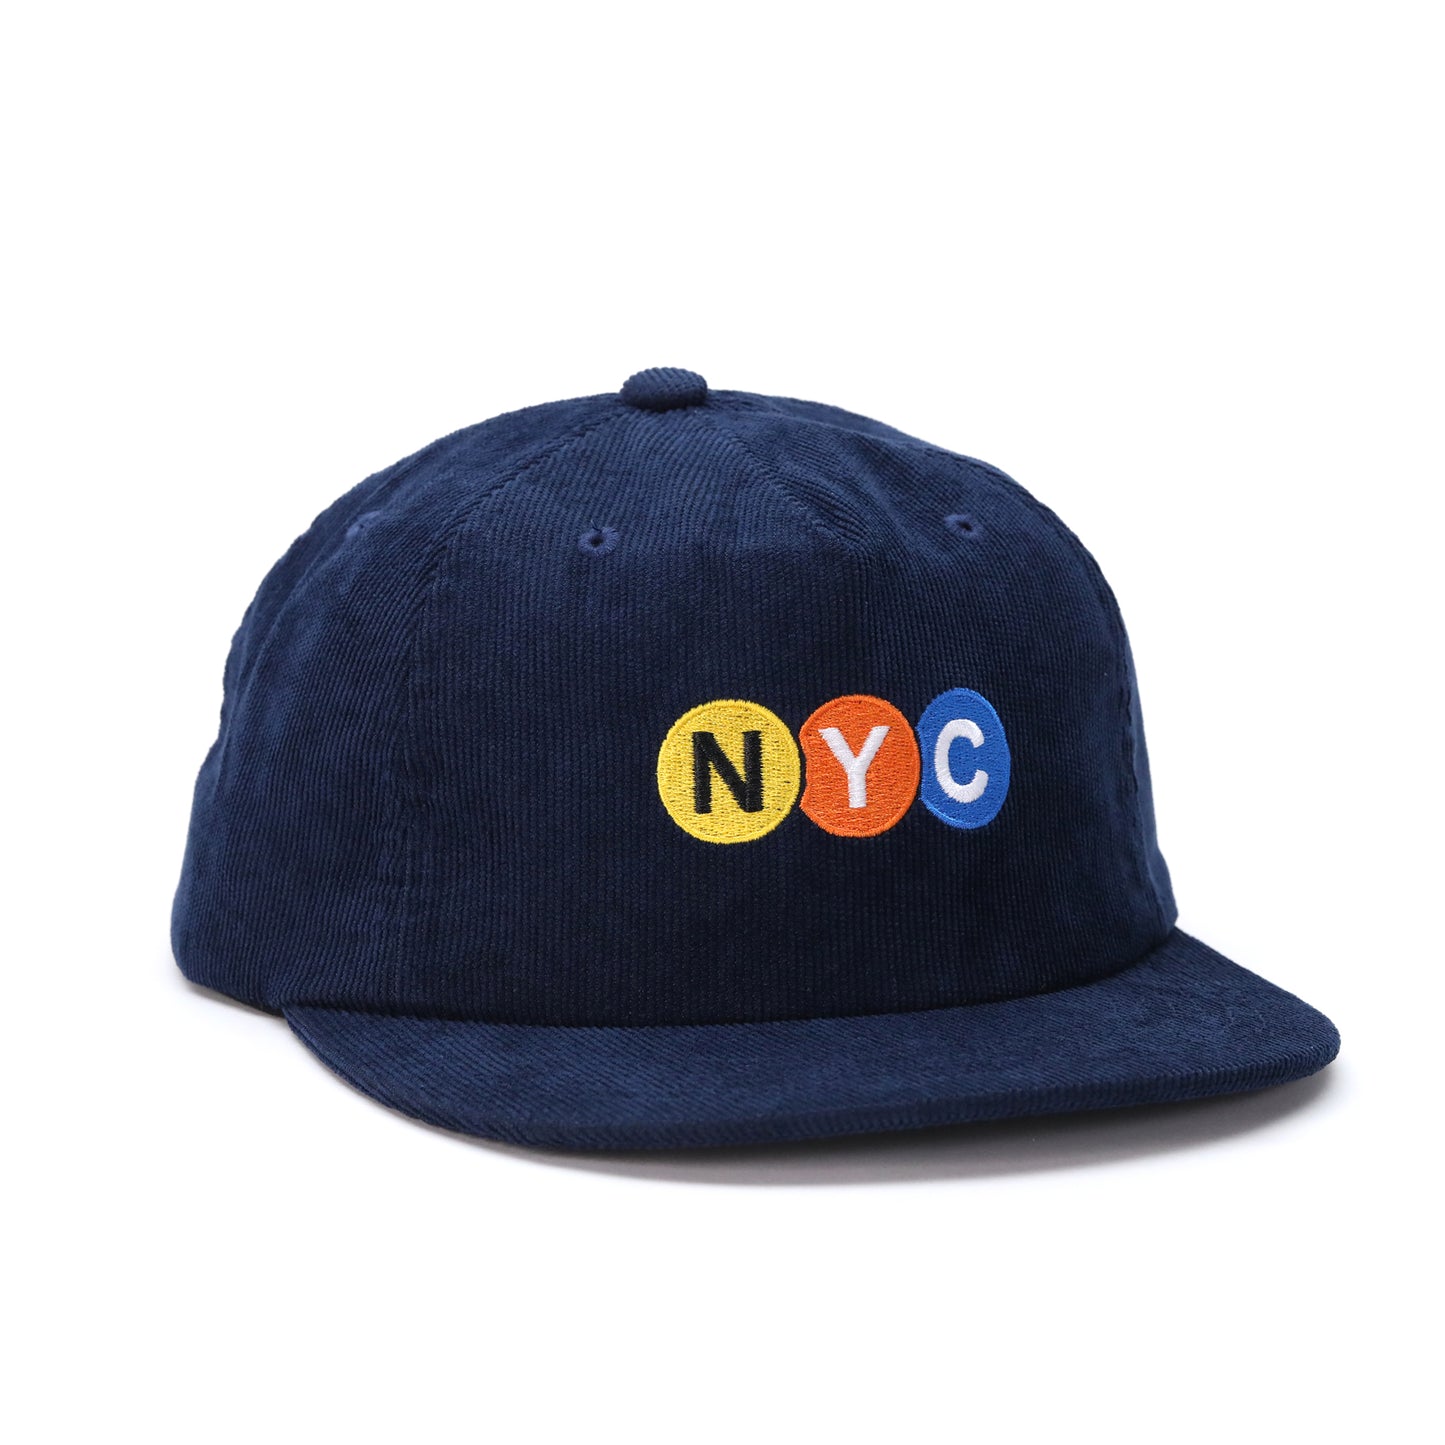 NYC Subway- Navy Blue